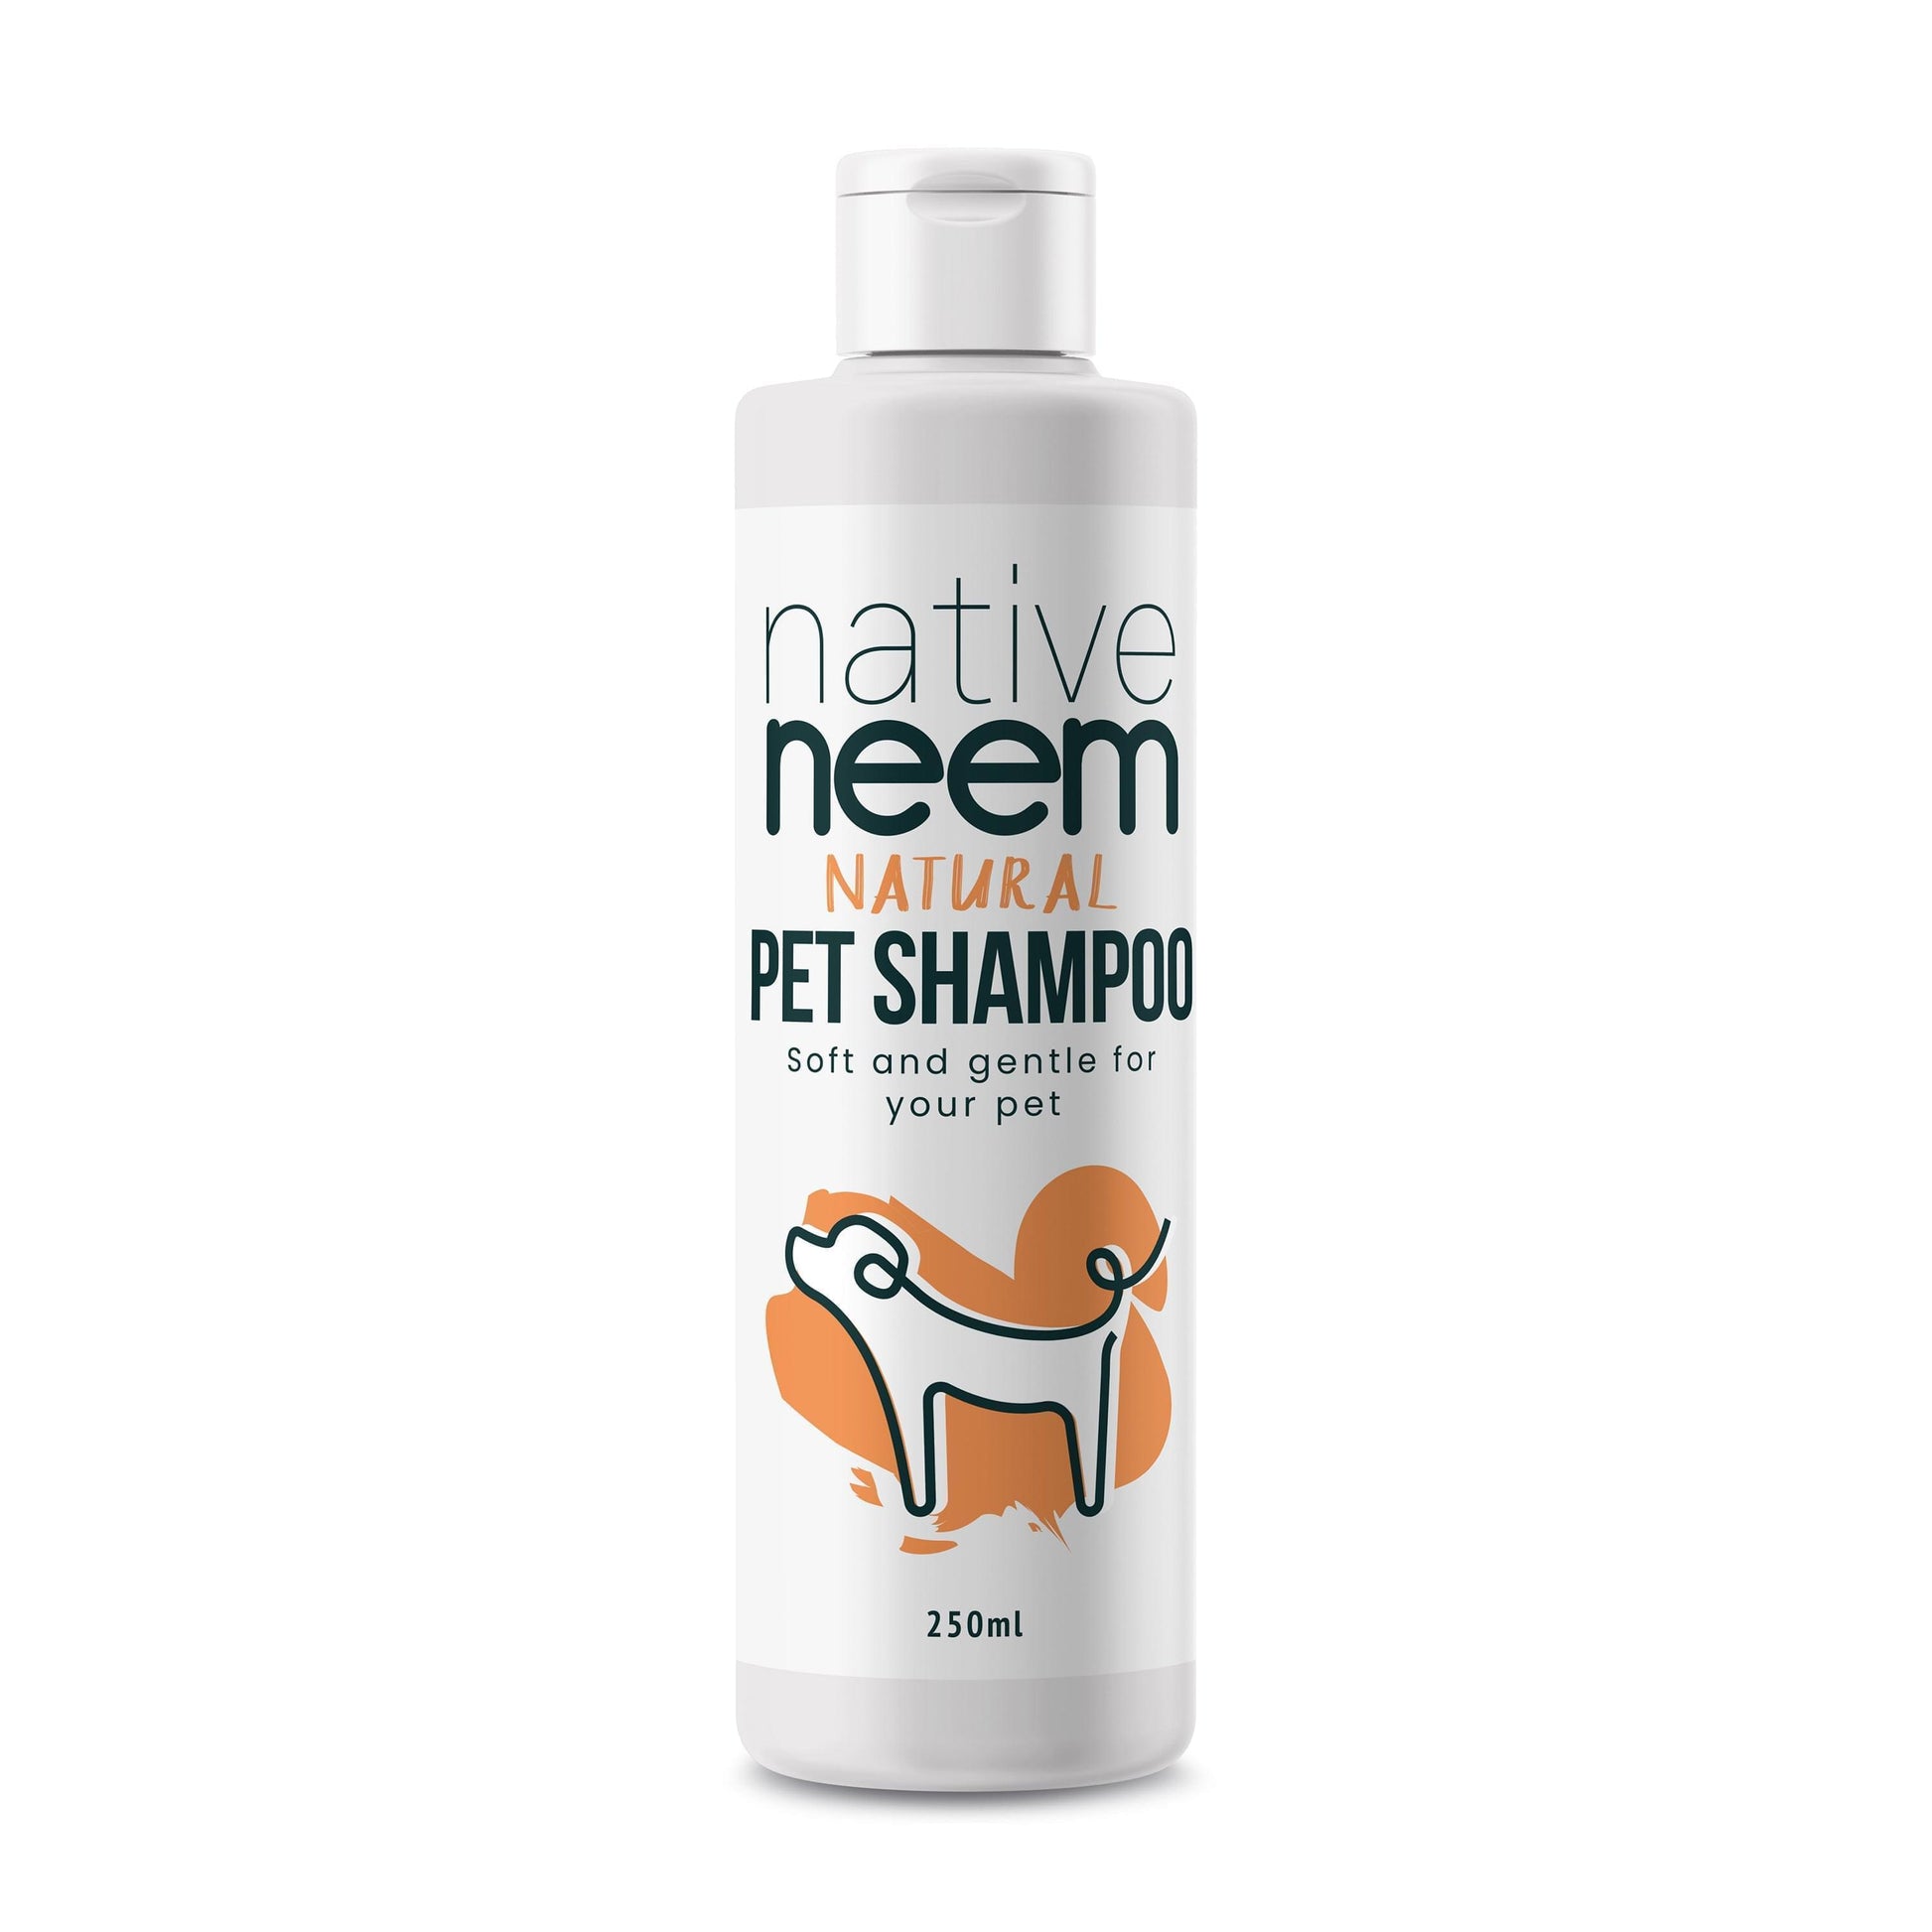 Organic Neem Pet Shampoo 250ml - NativeNeem